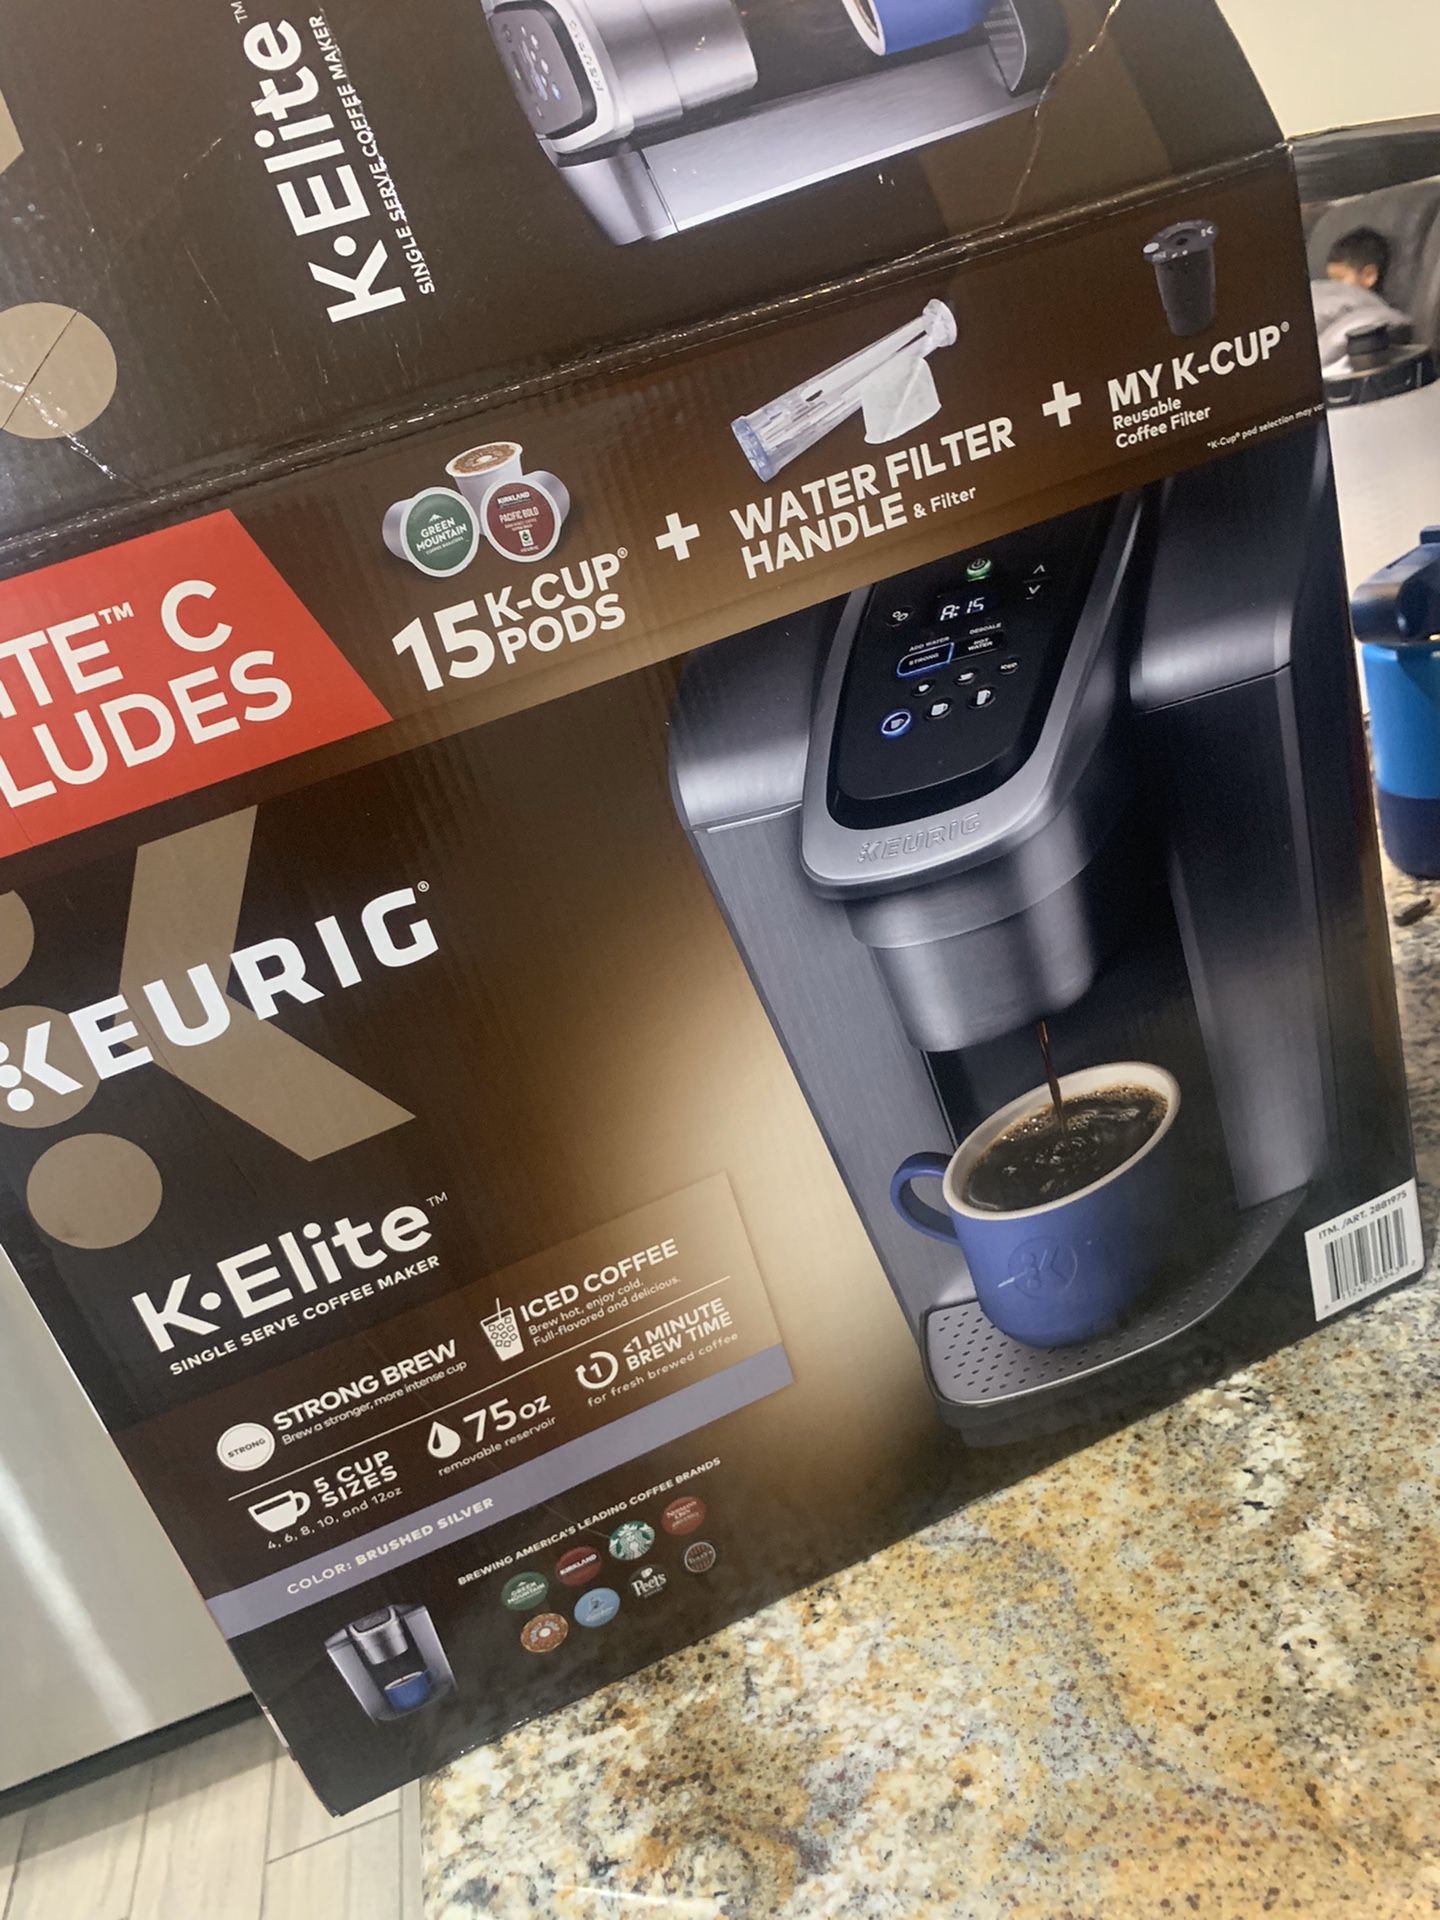 Keurig Elite C single serve coffee maker